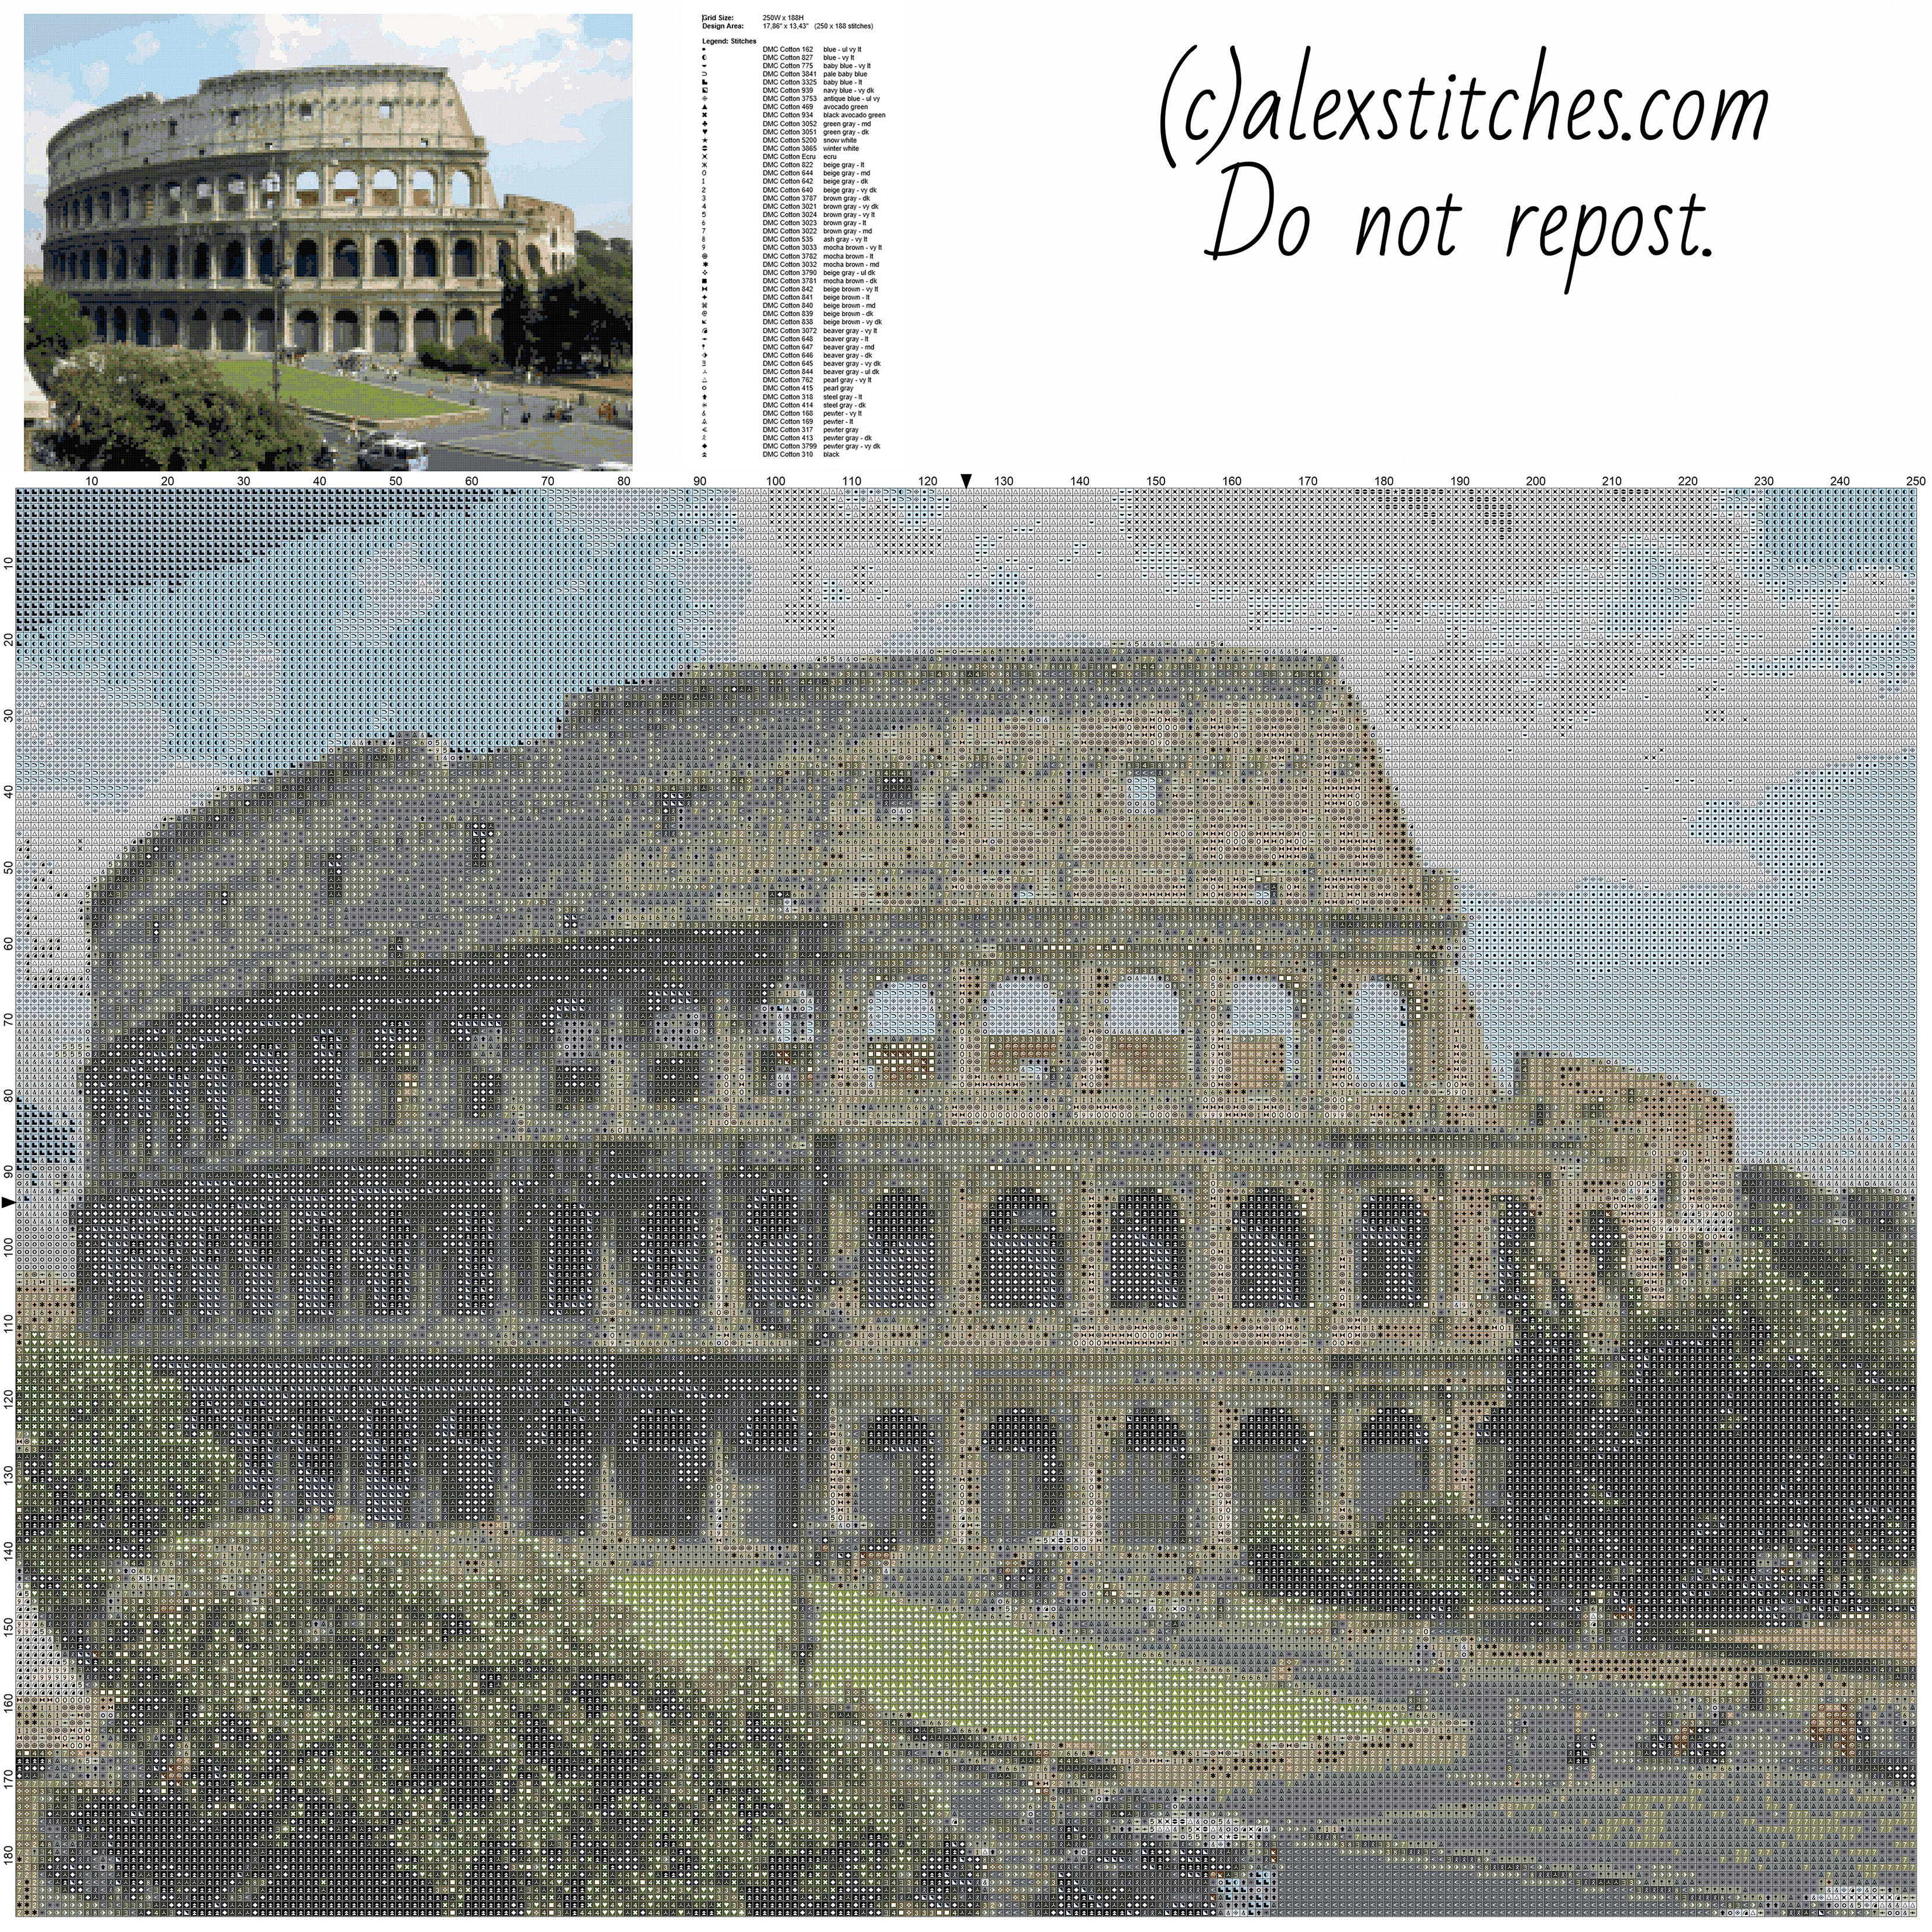 The Colosseum amphitheatre in Rome free cross stitch pattern